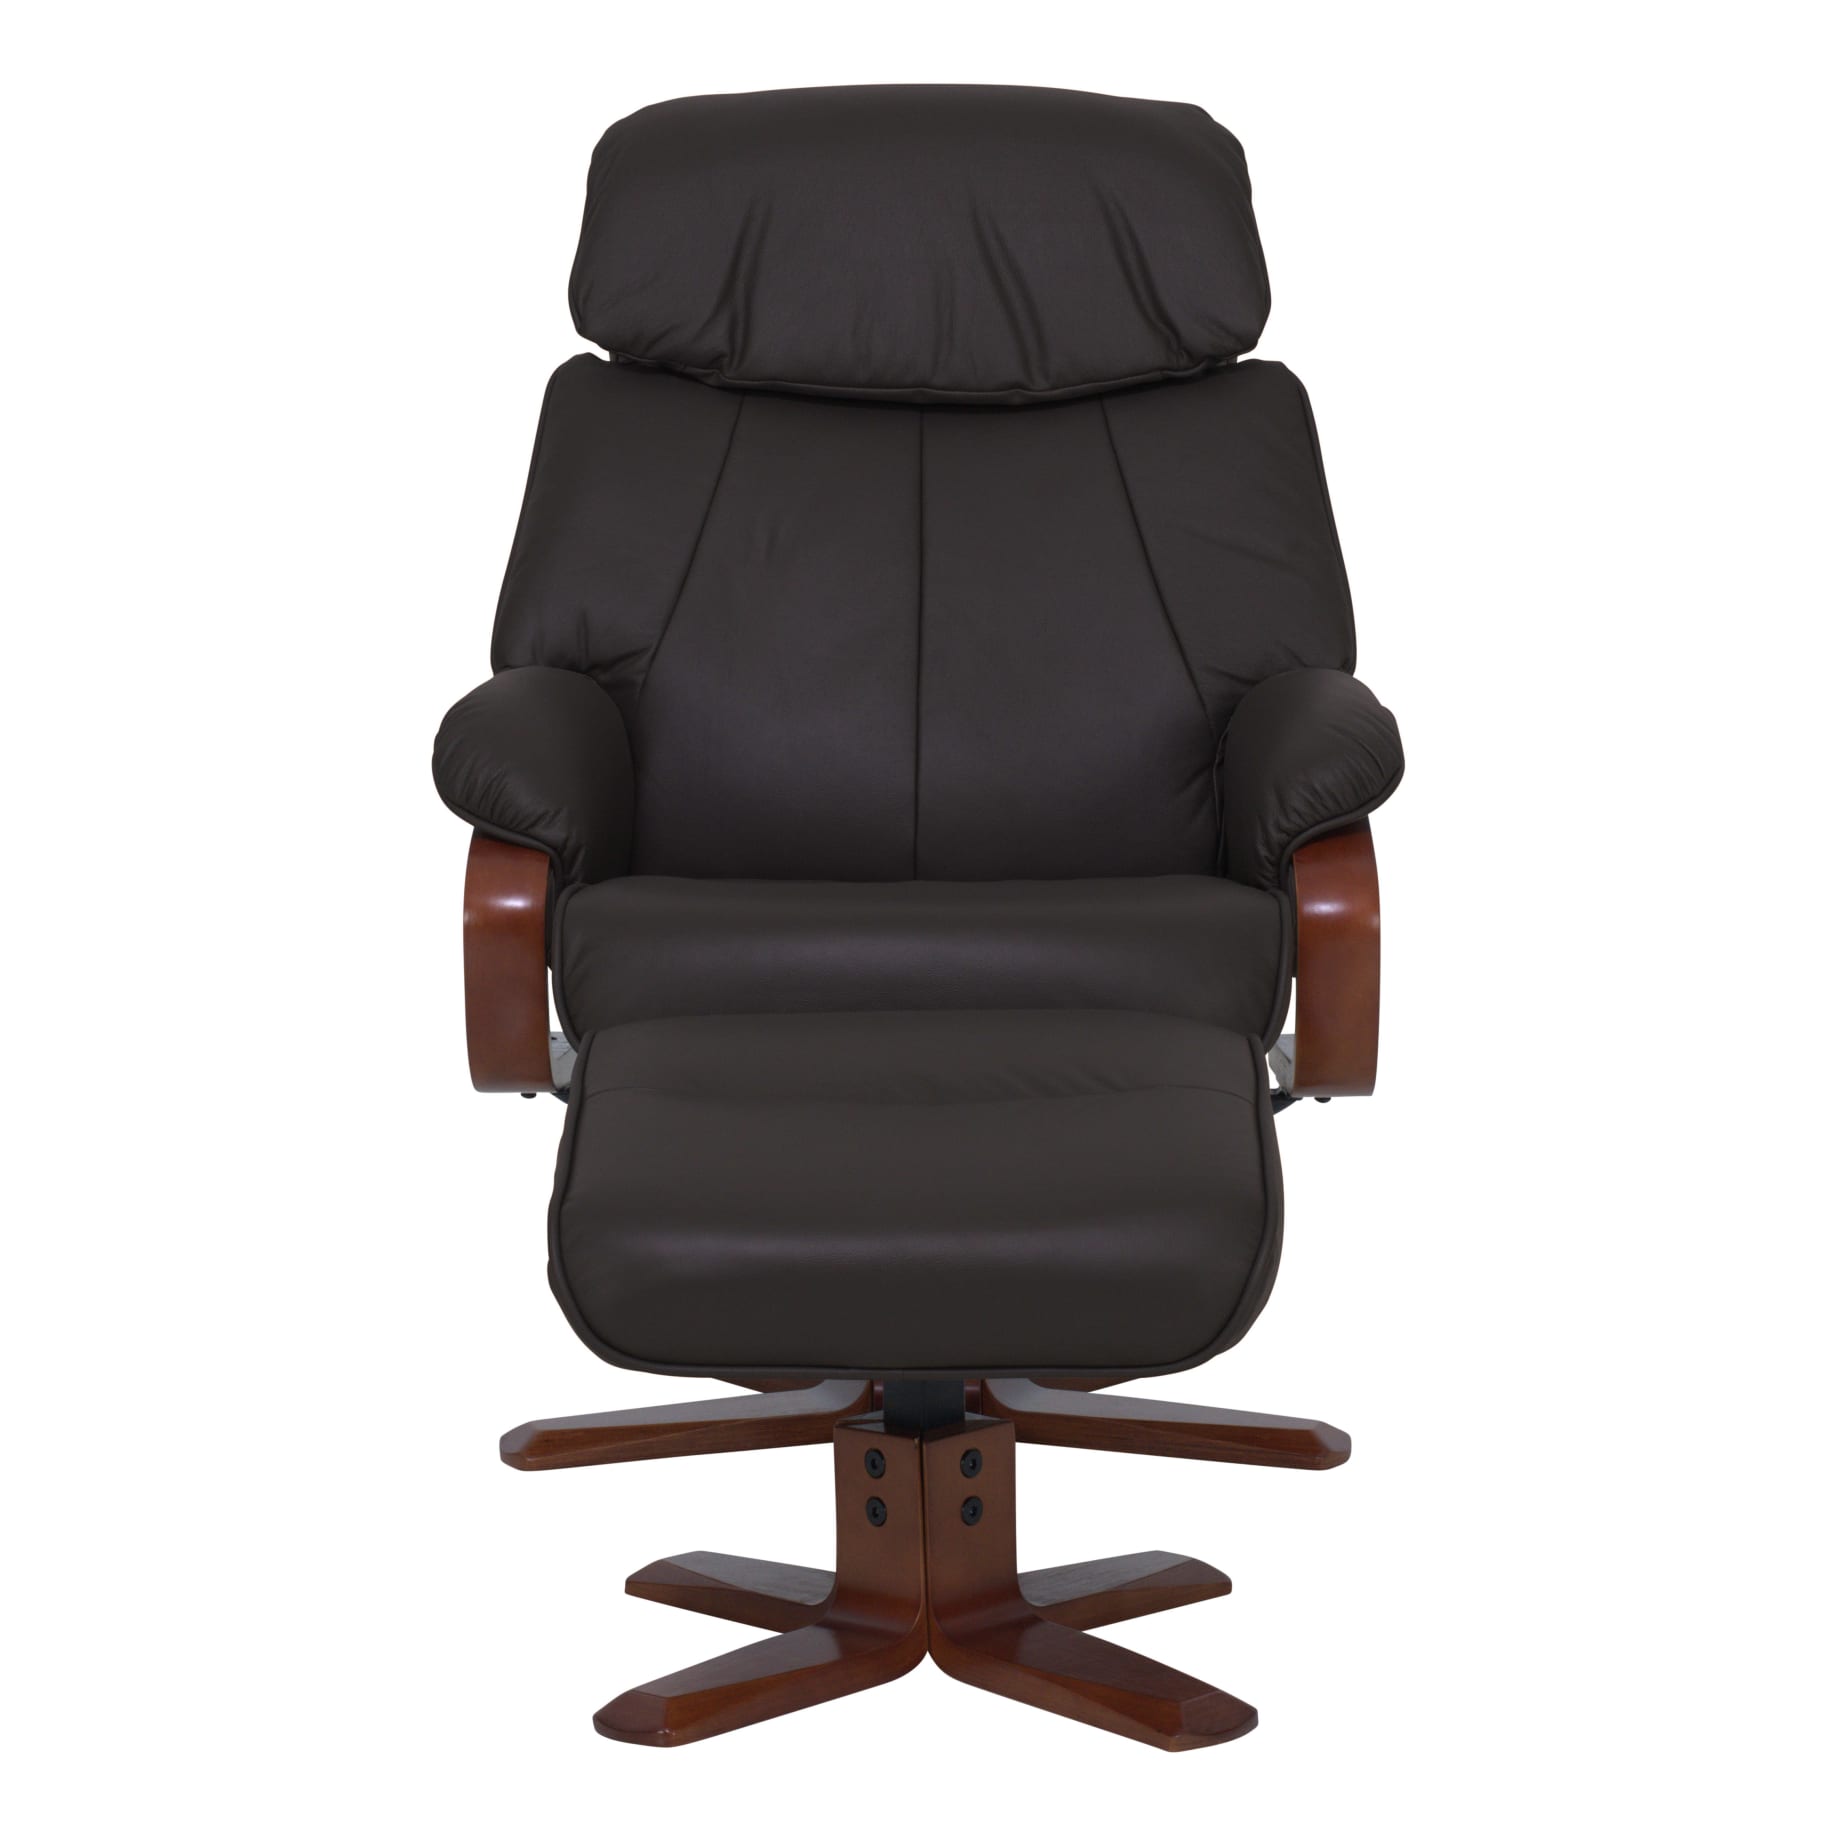 Turner Recliner Chair + Ottoman in Chocolate / Chocolate Leg